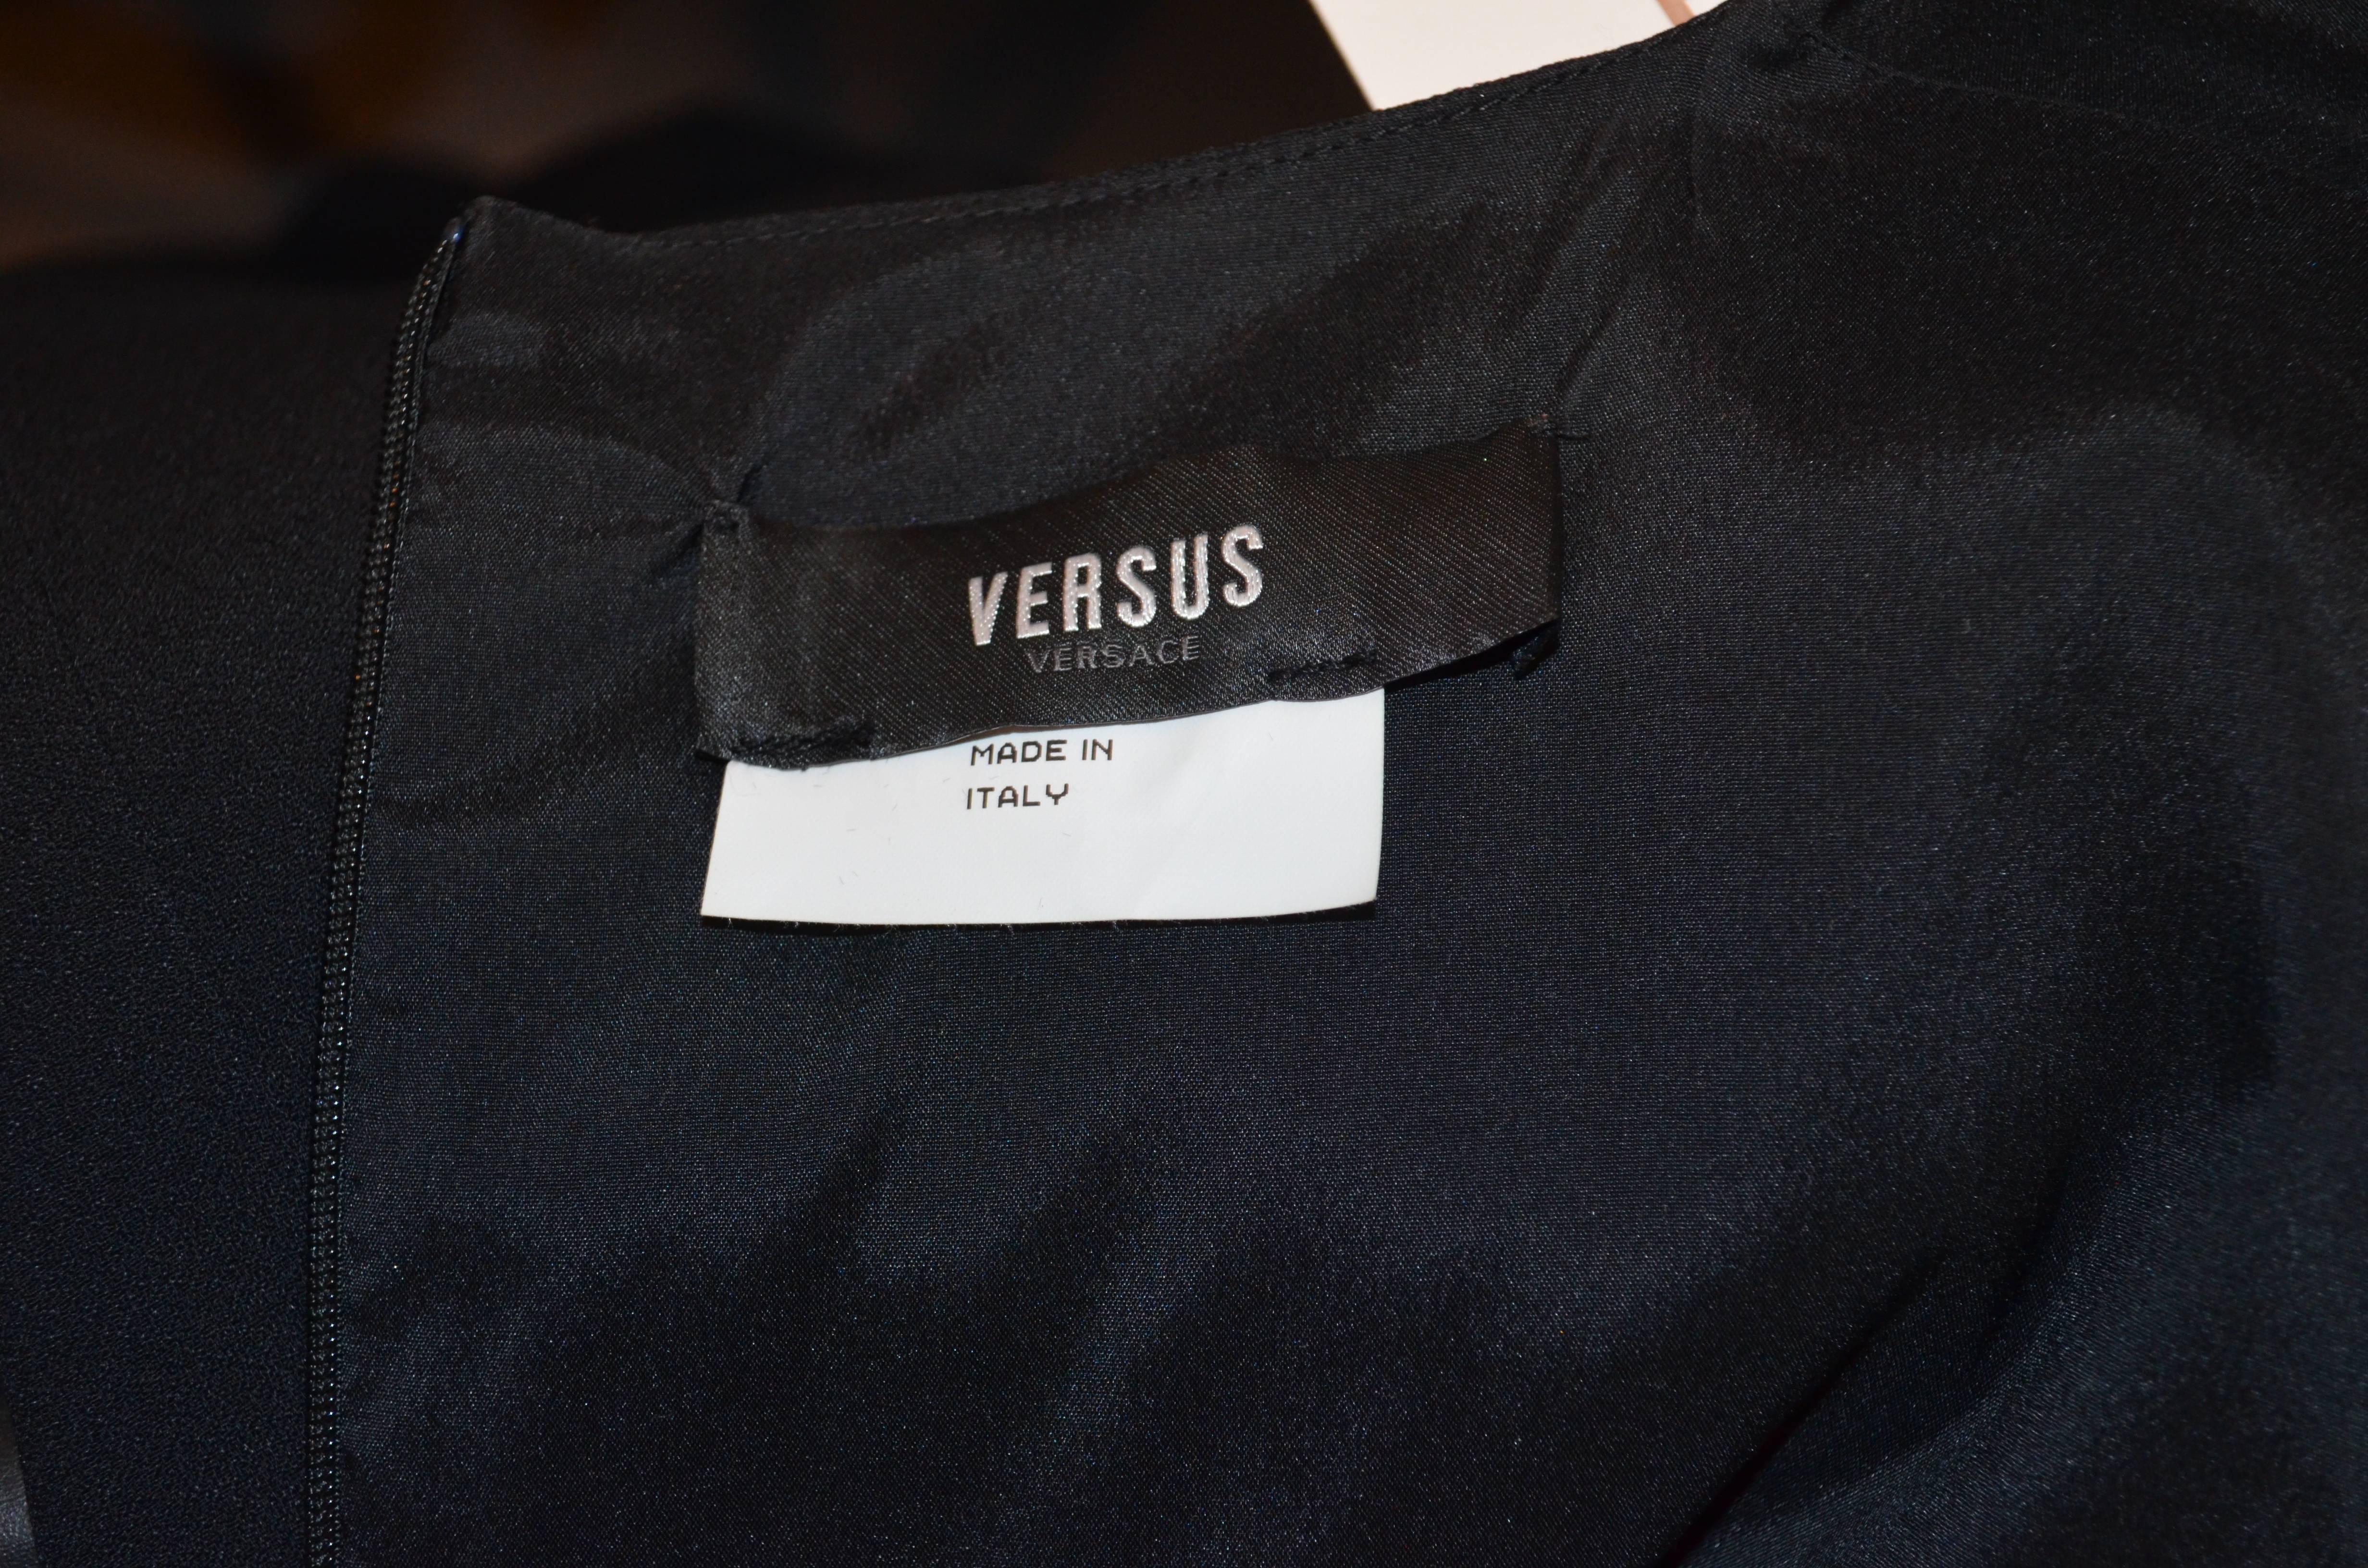 Versus Versace Safety Pin Dress 2